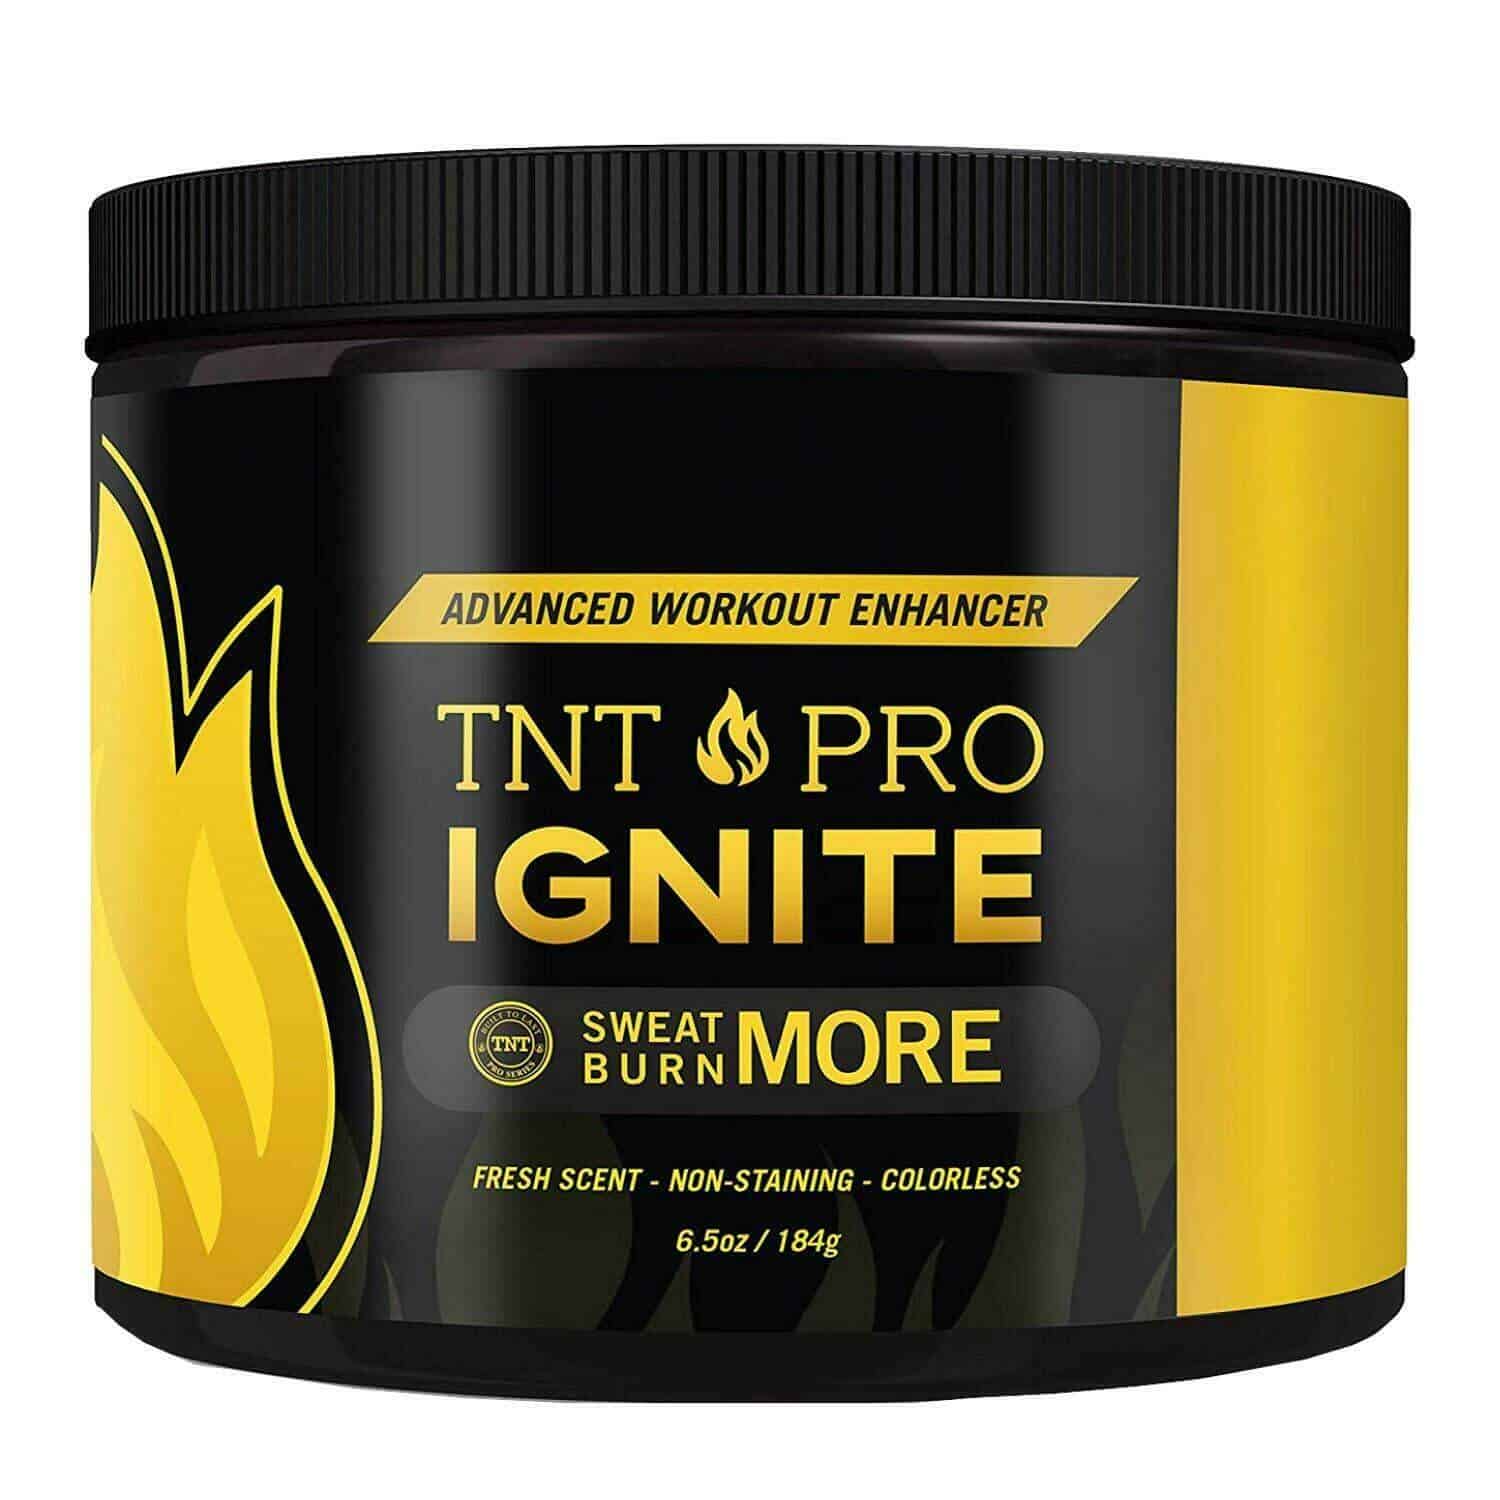 TNT Pro Ignite Fat Burning Cream